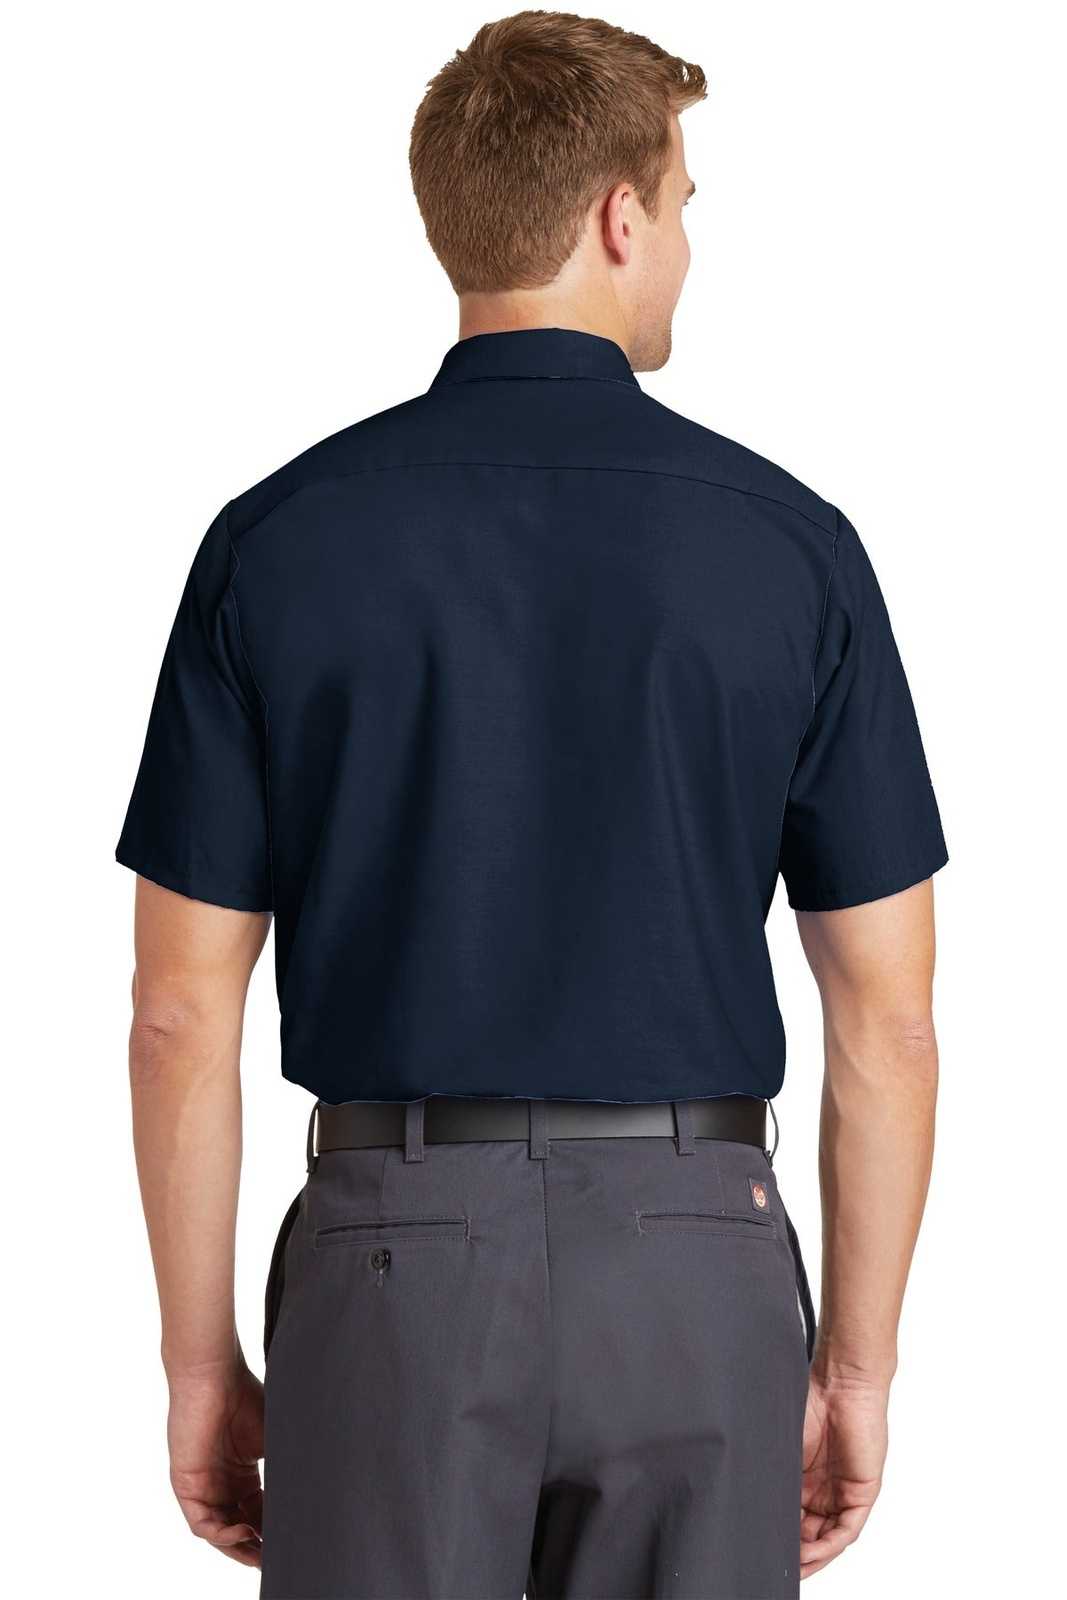 Red Kap SP24 Short Sleeve Industrial Work Shirt - Navy - HIT a Double - 1